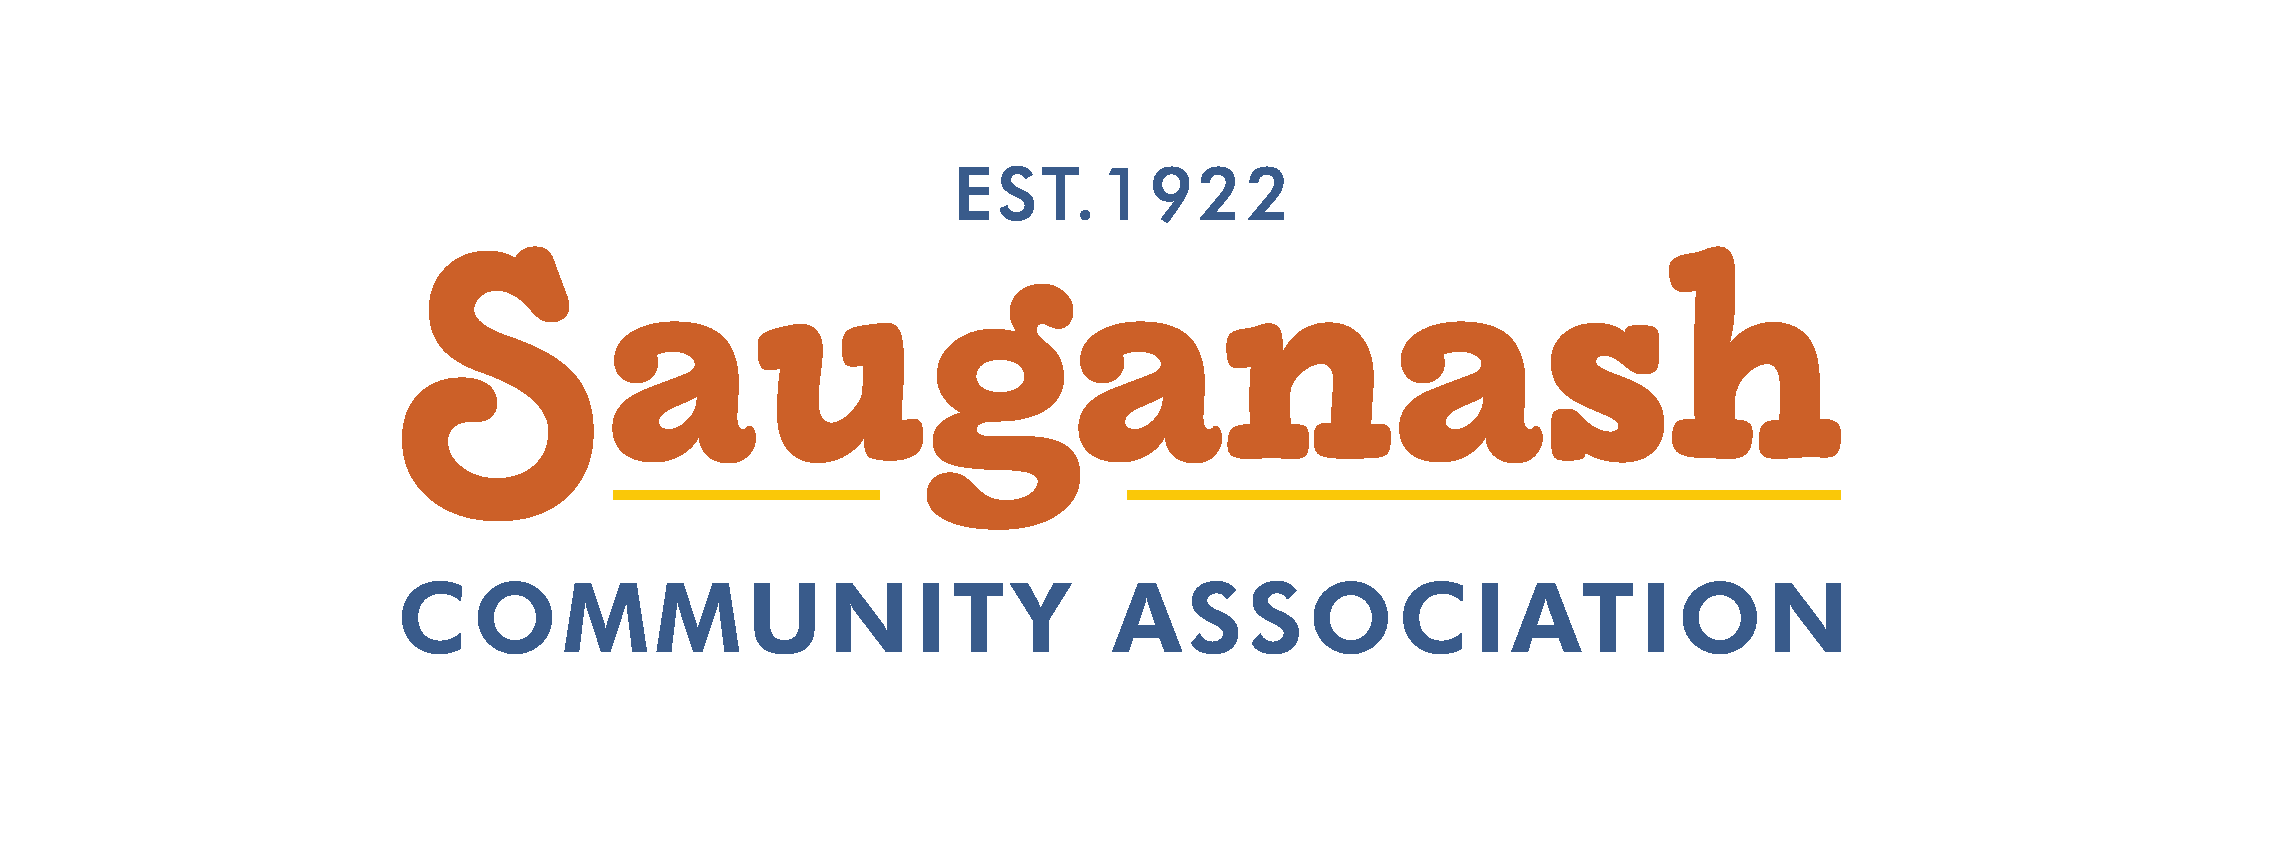 Sauganash Community Association